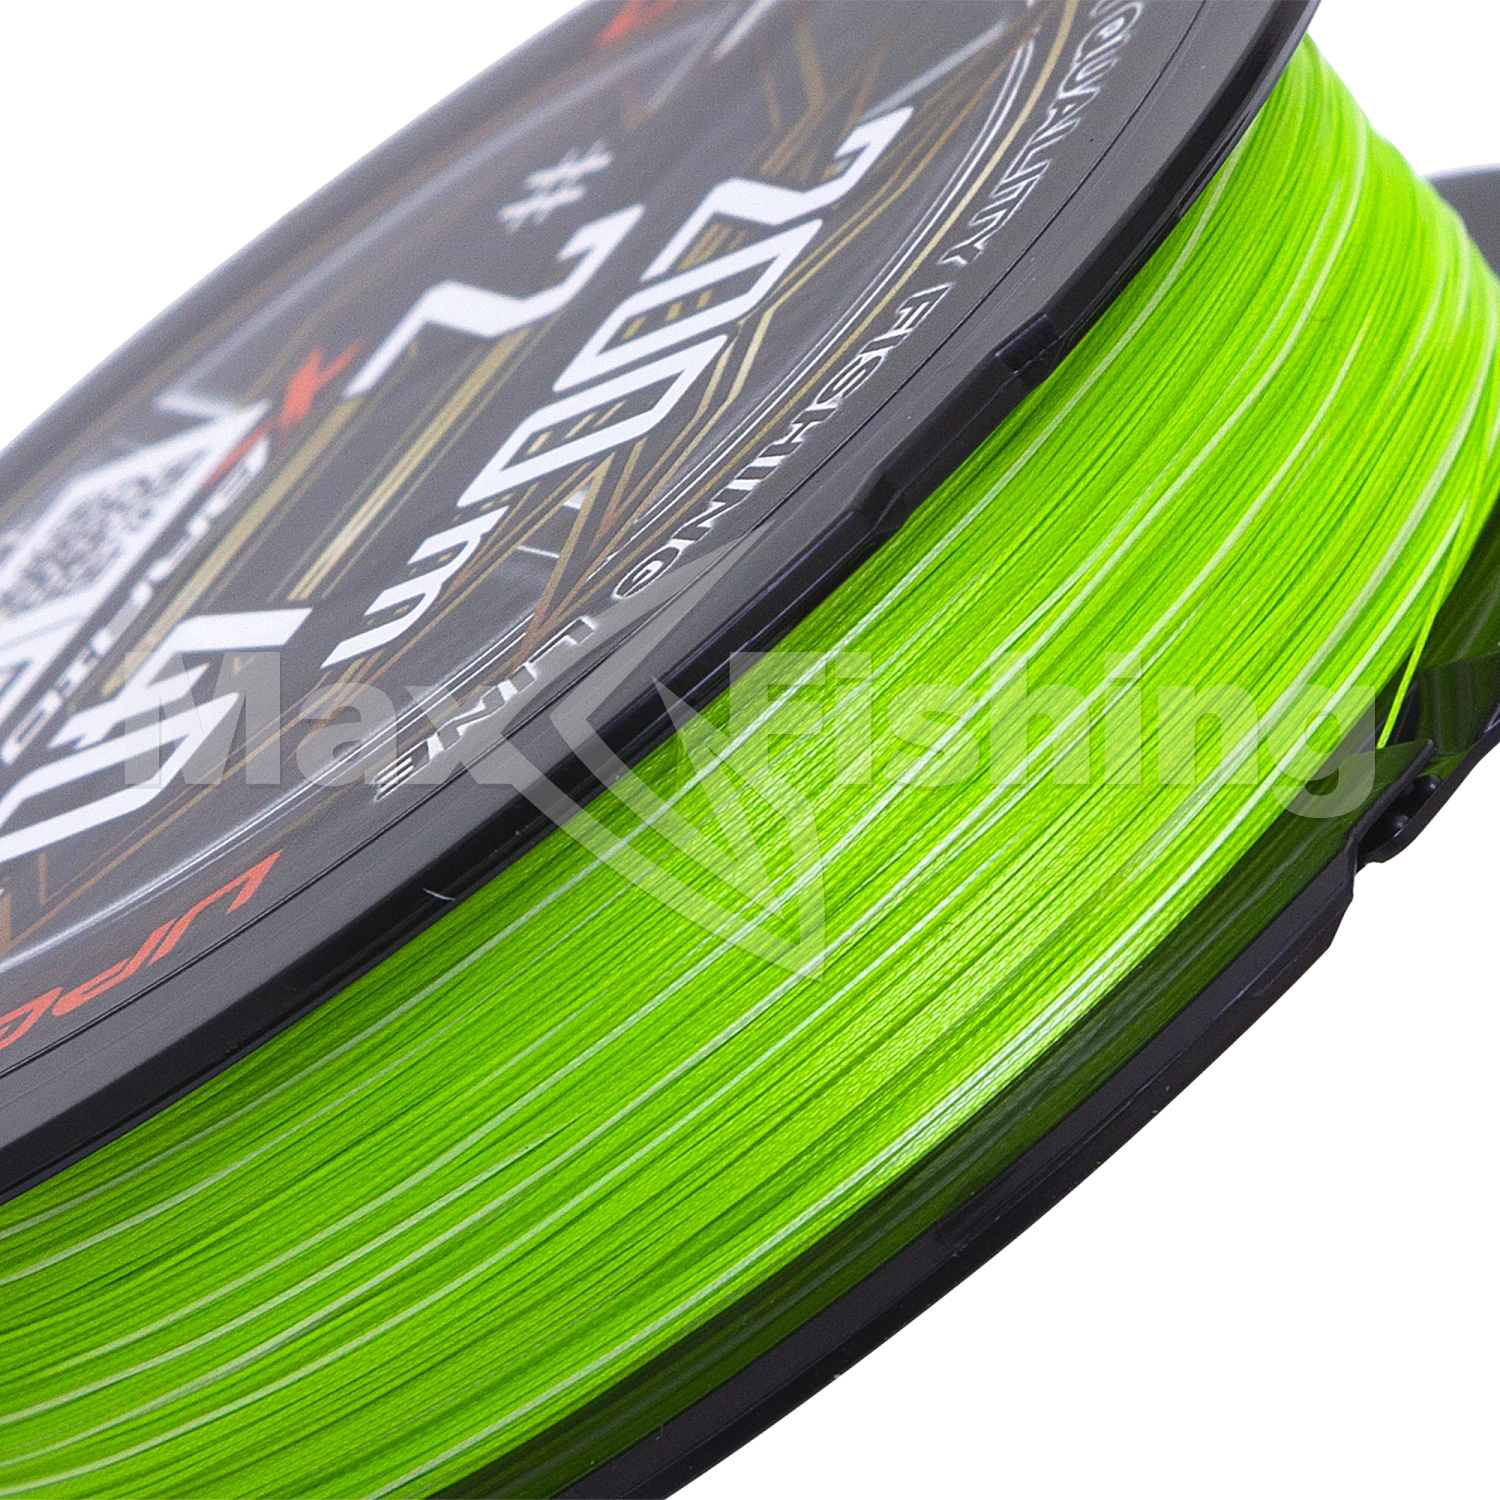 Шнур плетеный YGK X-Braid Upgrade PE X8 #2 0,235мм 200м (green)